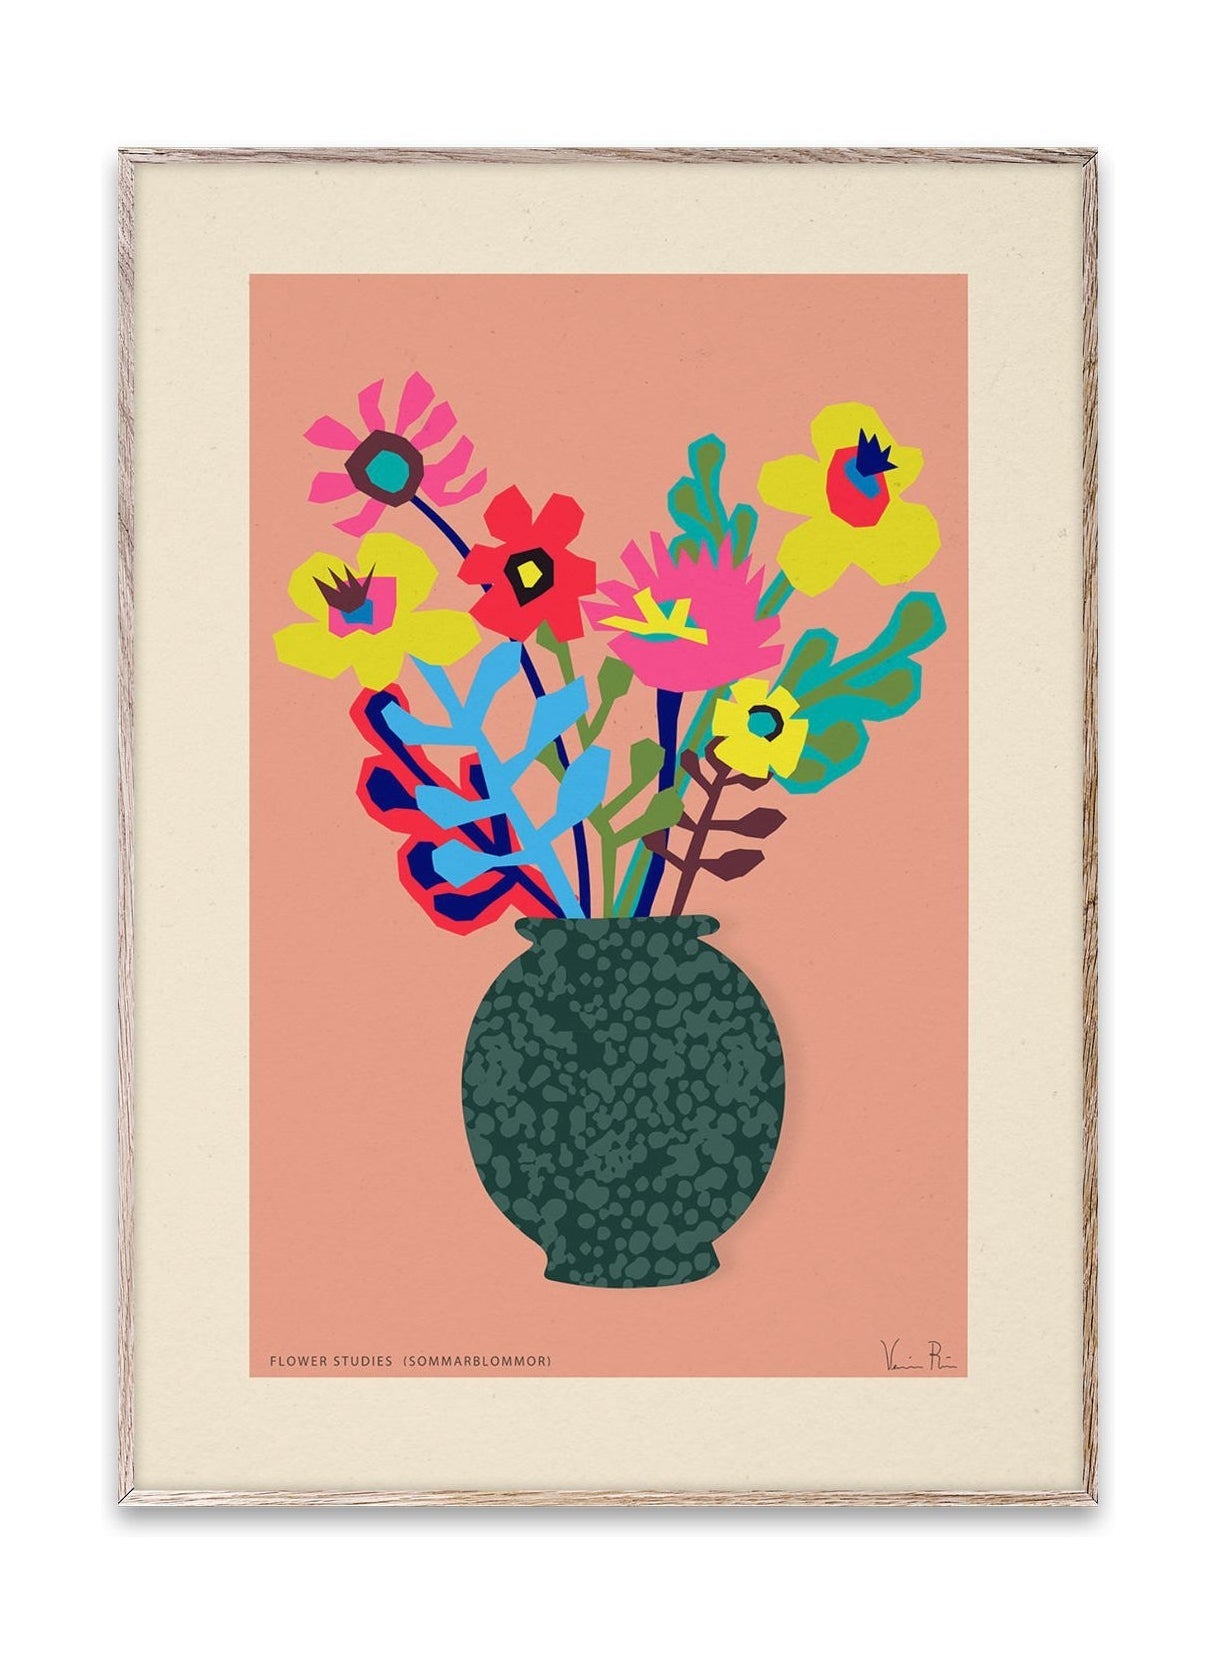 Paper Collective Flower Studies 02 (Sommarblommar) Plakat, 30x40 cm